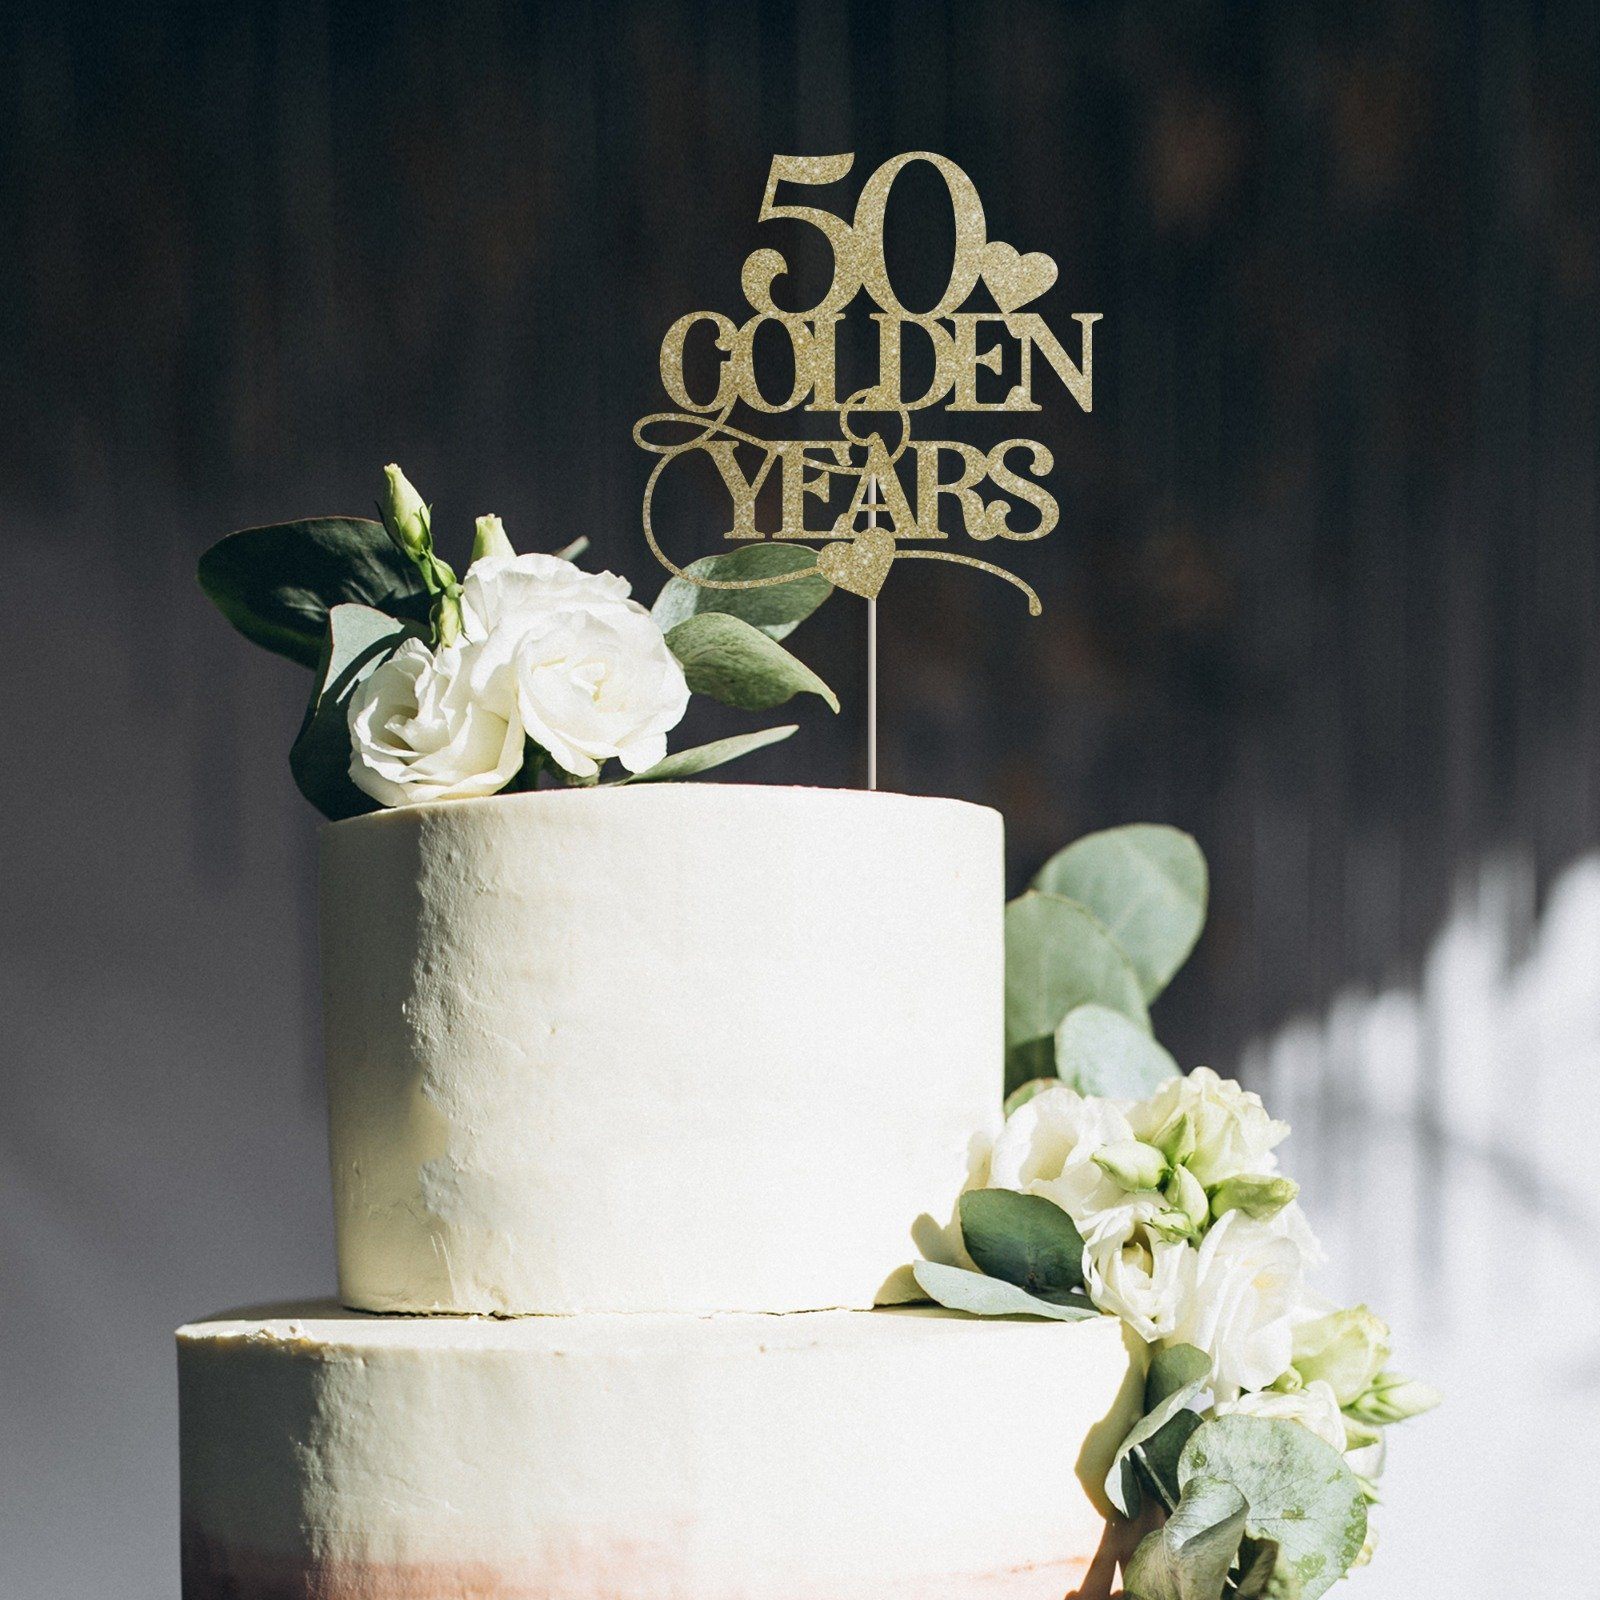 50th Golden Wedding Anniversary Cake | 50th wedding anniversary cakes, 50th  anniversary cakes, Wedding anniversary cakes